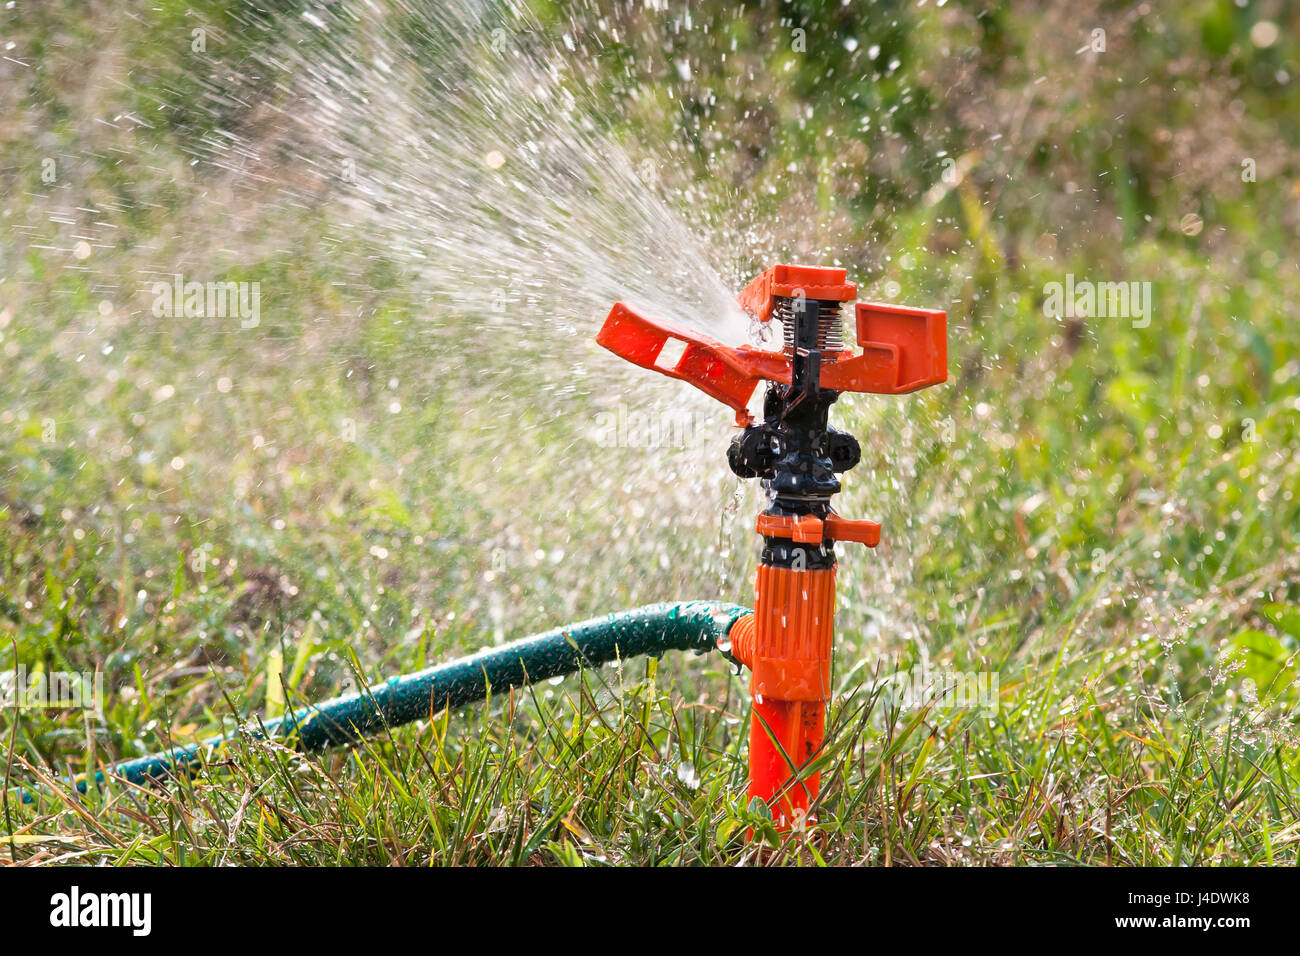 sprinkler spraying water over grass for watering garden Stock Photo